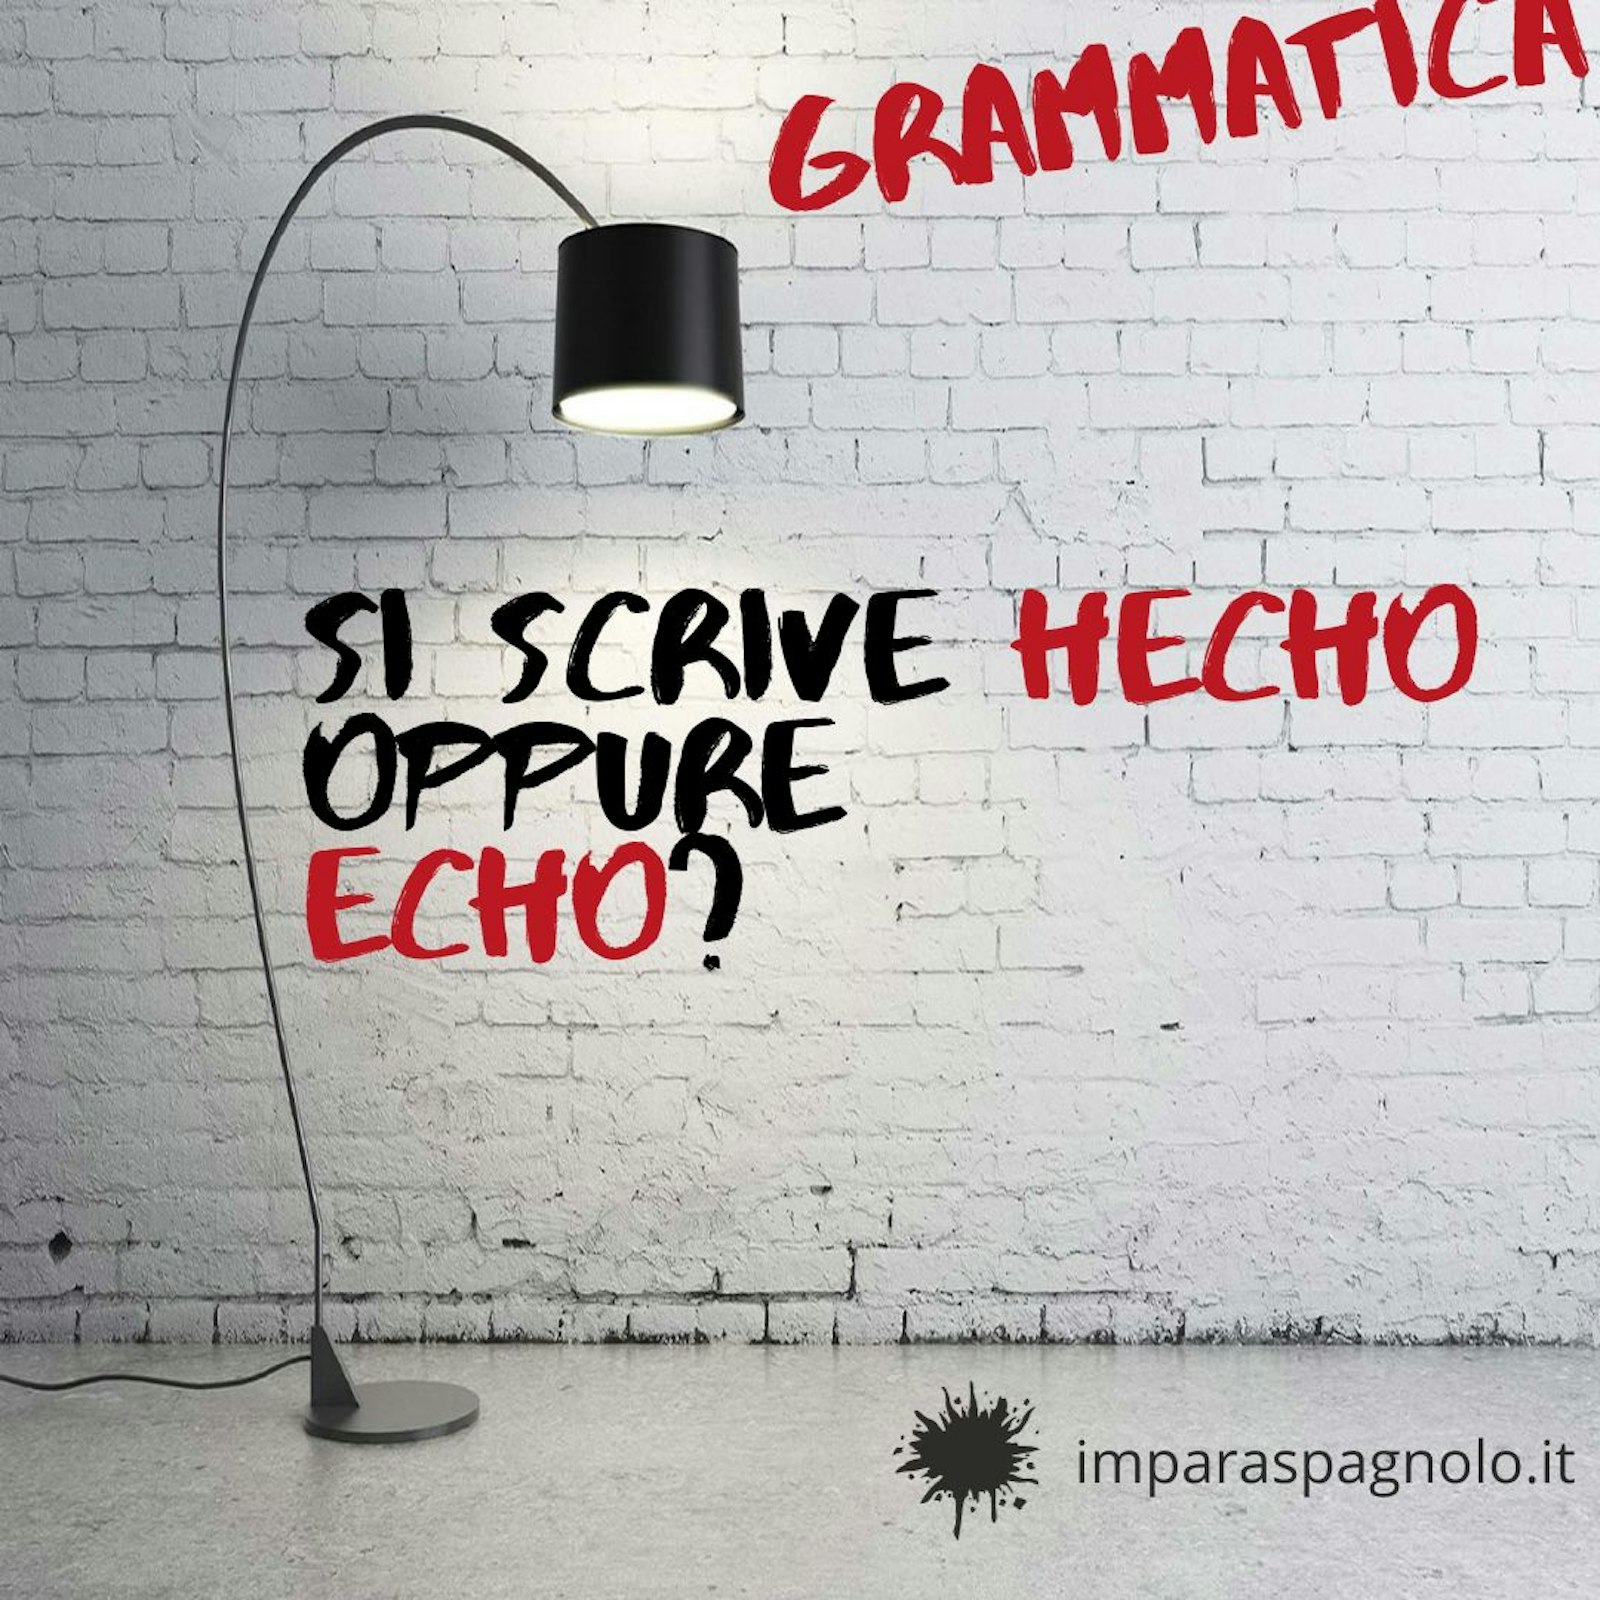 Grammatica: si scrive hecho oppure echo?